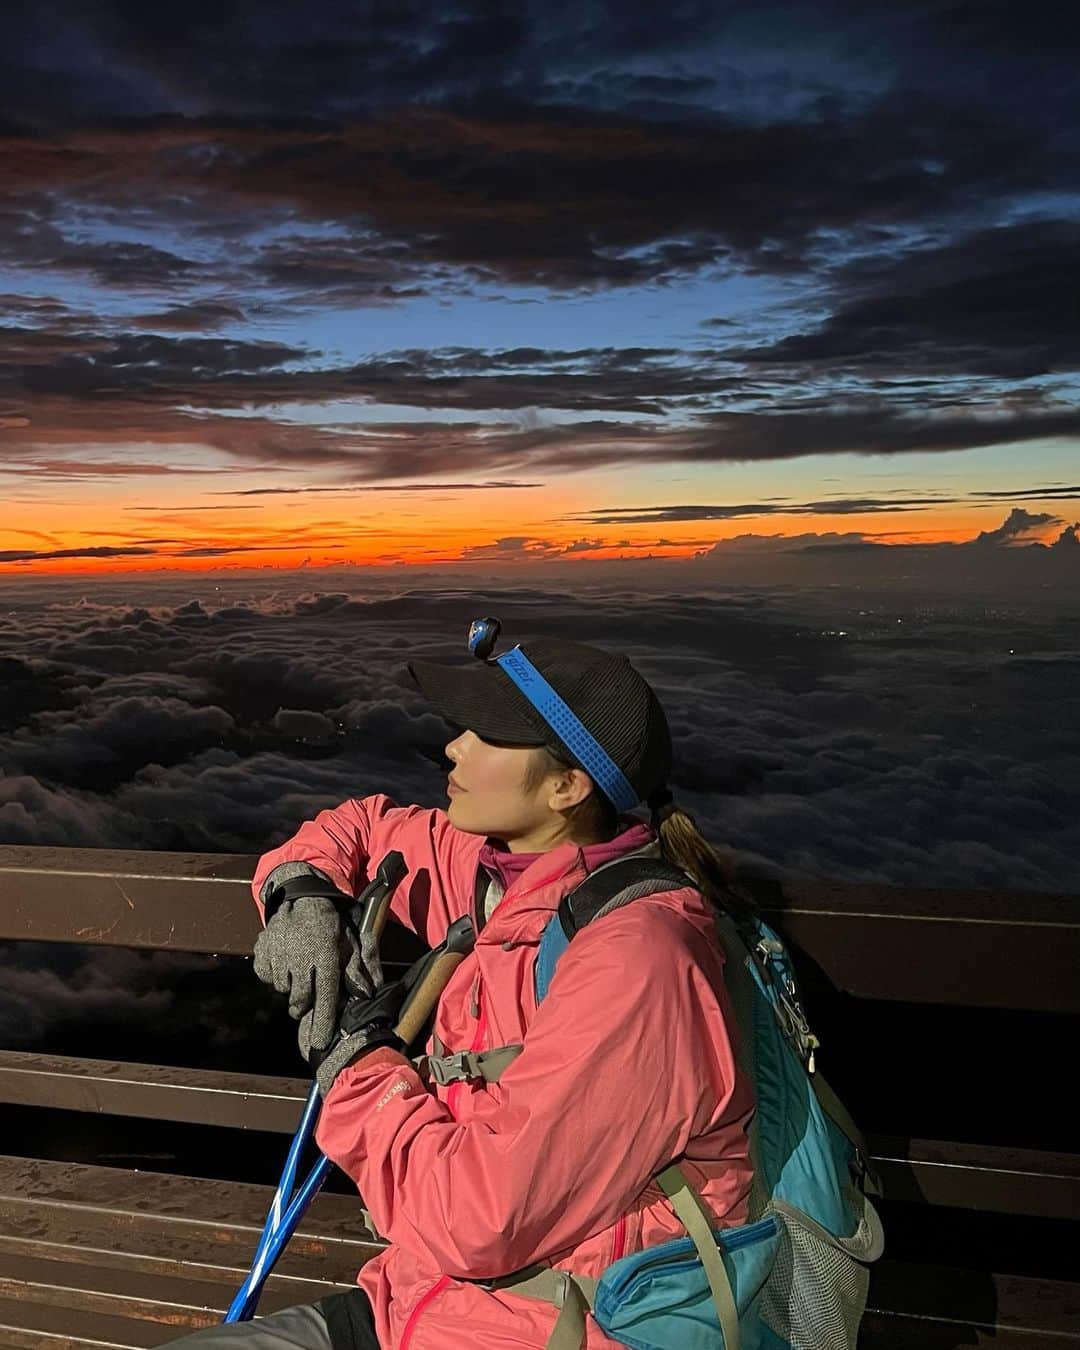 DJ NANAのインスタグラム：「先週月曜日30歳の記念に 富士山登山チャレンジしてきました🎉  コースは吉田コース⛰ 登山は未経験🥶  夜9:30にスタート！ 最初は雨がすごかったけど 7合目ごろから少し落ち着いて 御来光前にはキレイすぎる雲海が..✨  写真は8合5勺目にあるの御来光館で 御来光30分前の写真📸  キレイすぎた...🥹💓  #富士山 #富士山登山 #8合5勺  #御来光館 #弾丸登山 #初登山 #30歳記念 #人生一の絶景 #感動 #また明日富士山投稿します」